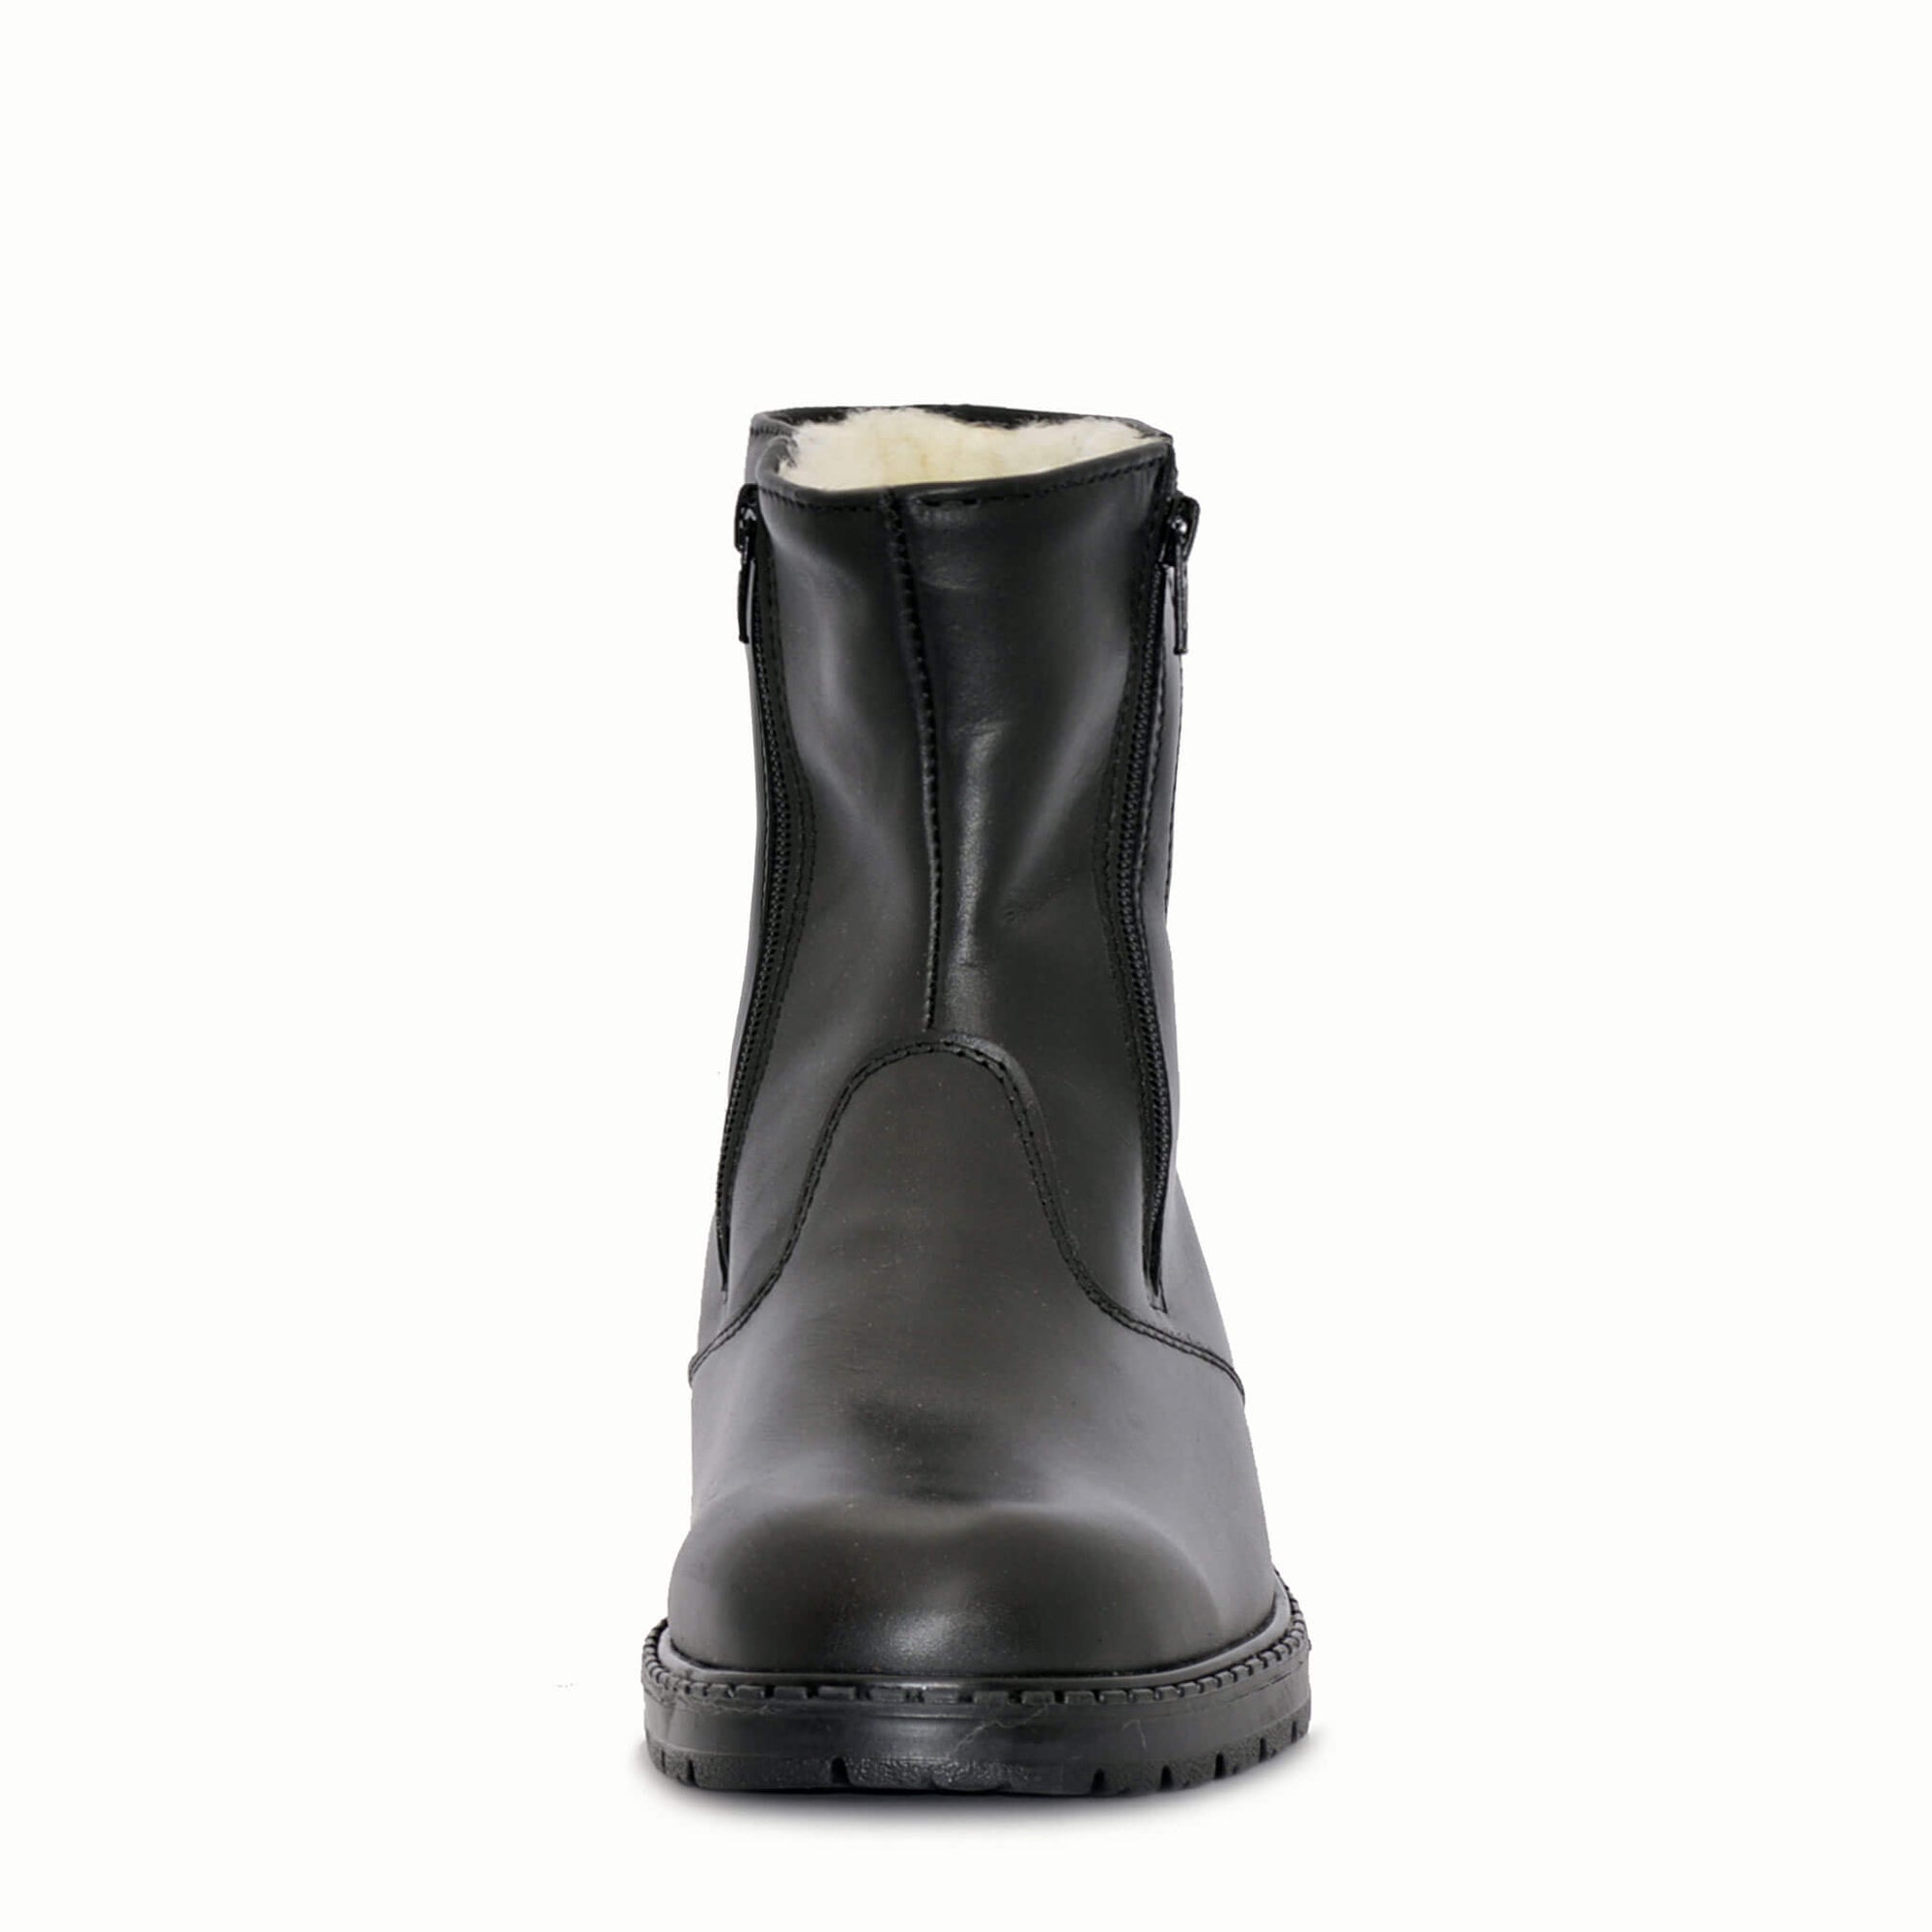 Outback winter boot for men - Black